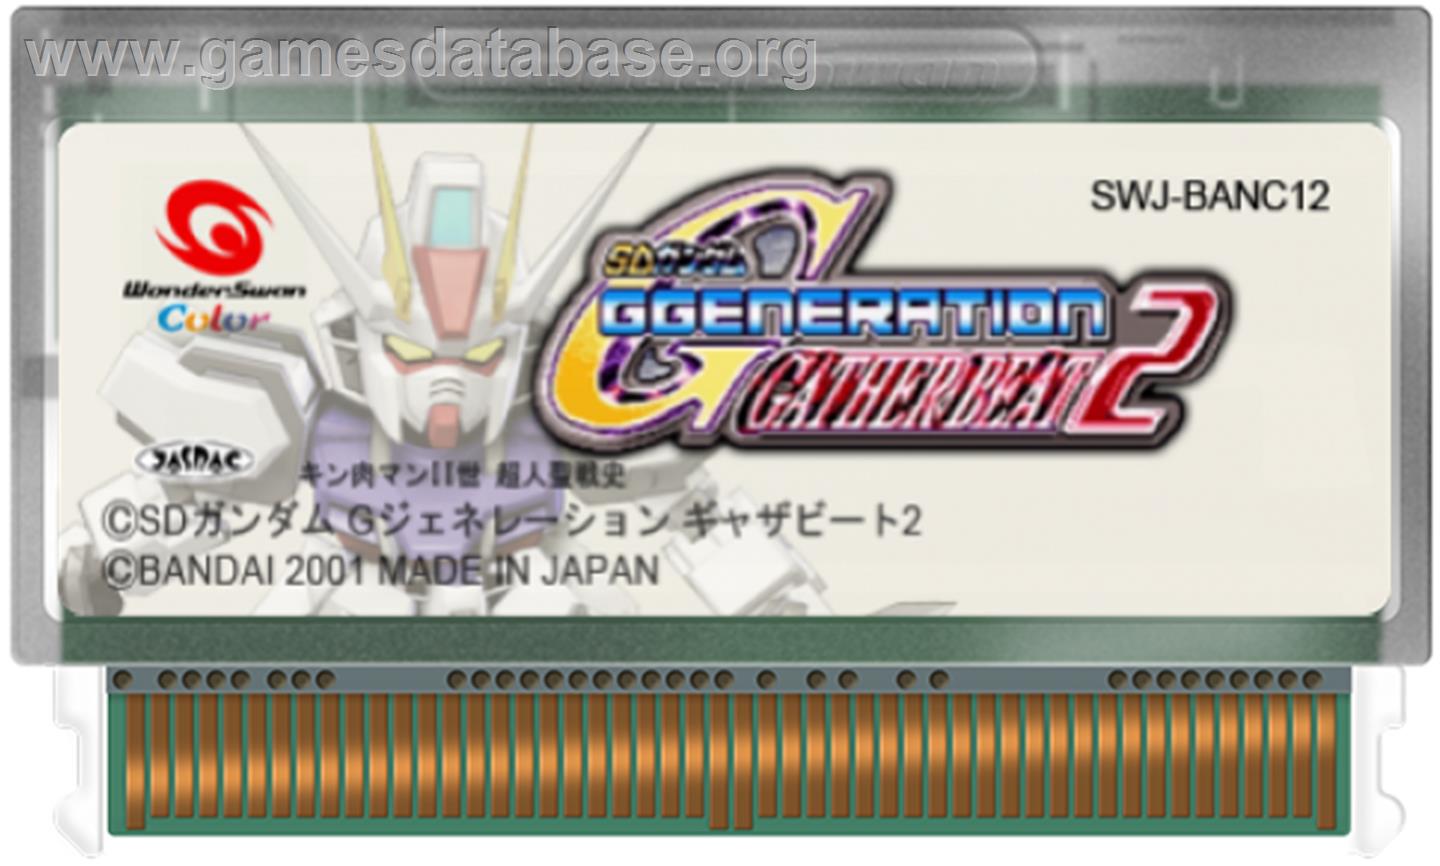 SD Gundam G Generation: Gather Beat 2 - Bandai WonderSwan Color - Artwork - Cartridge